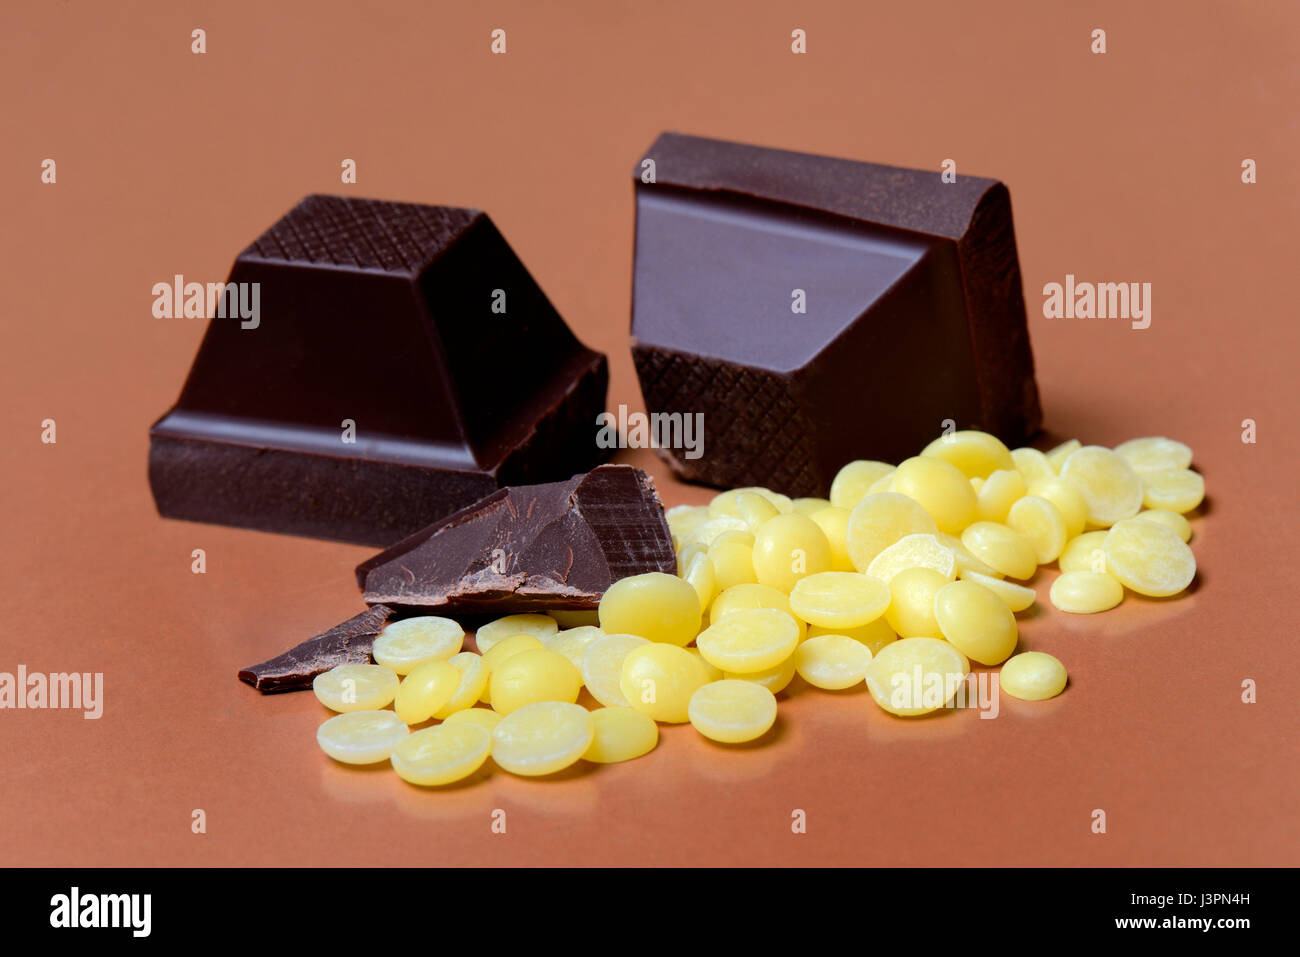 Kakaobutter-Chips und Block-Schokolade, Kuvertuere, Kuvertuere,Theobroma cacao, Schokolade, Schokoladenzutat Stock Photo